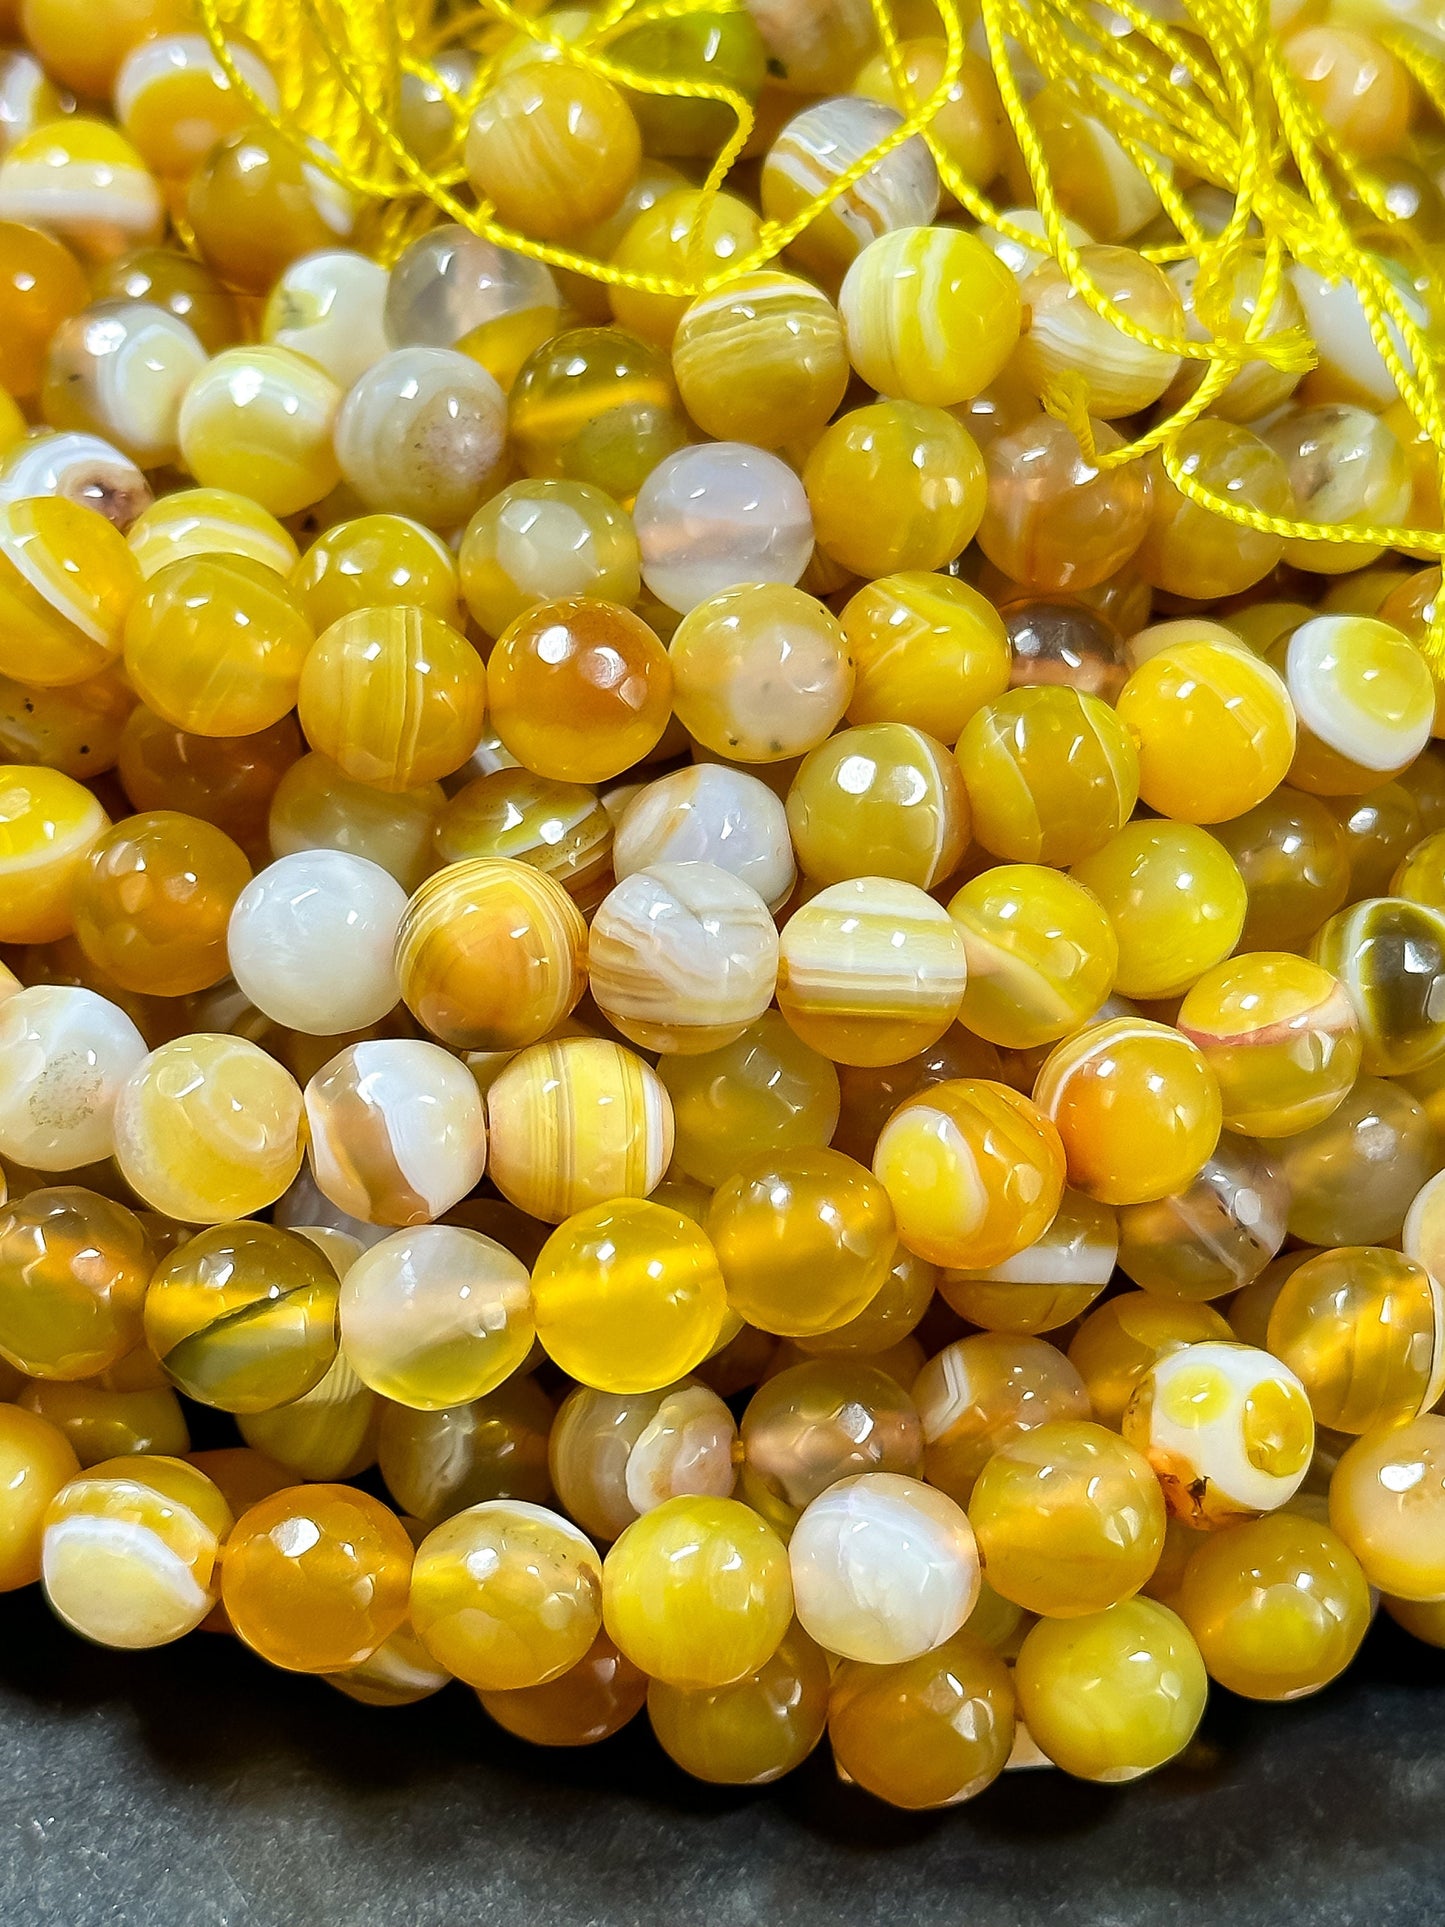 NATURAL Botswana Agate Gemstone Bead Faceted 8mm 10mm Round Beads, Beautiful Yellow White Color Gemstone Bead Full Strand 15.5"